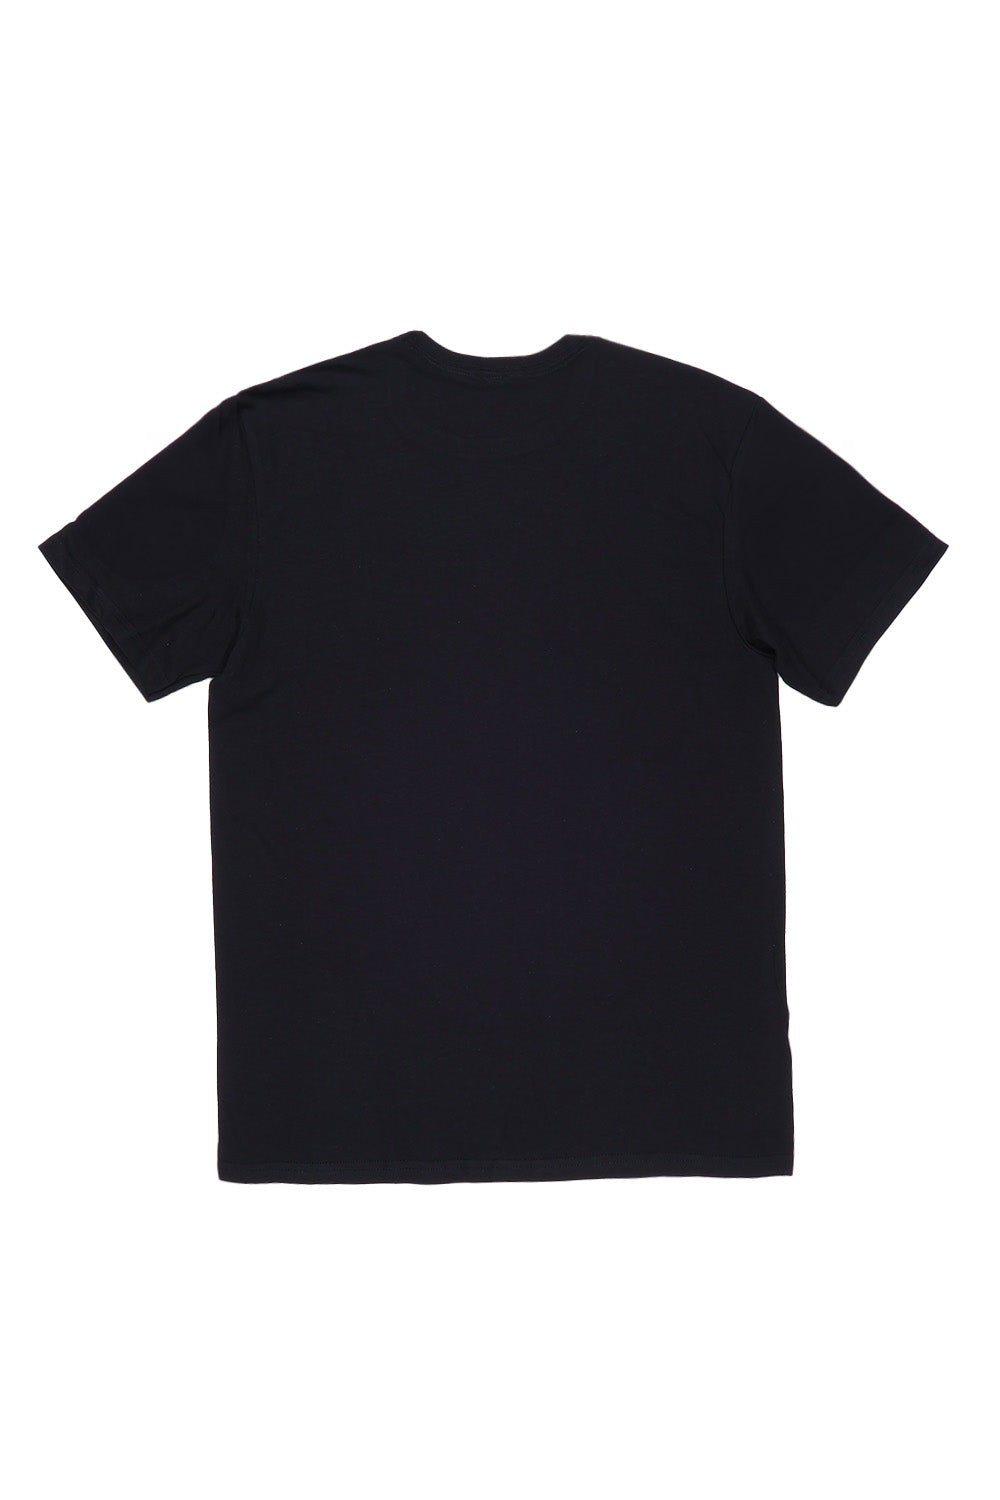 Softstyle Plain T-Shirt in Black (Custom Pack)